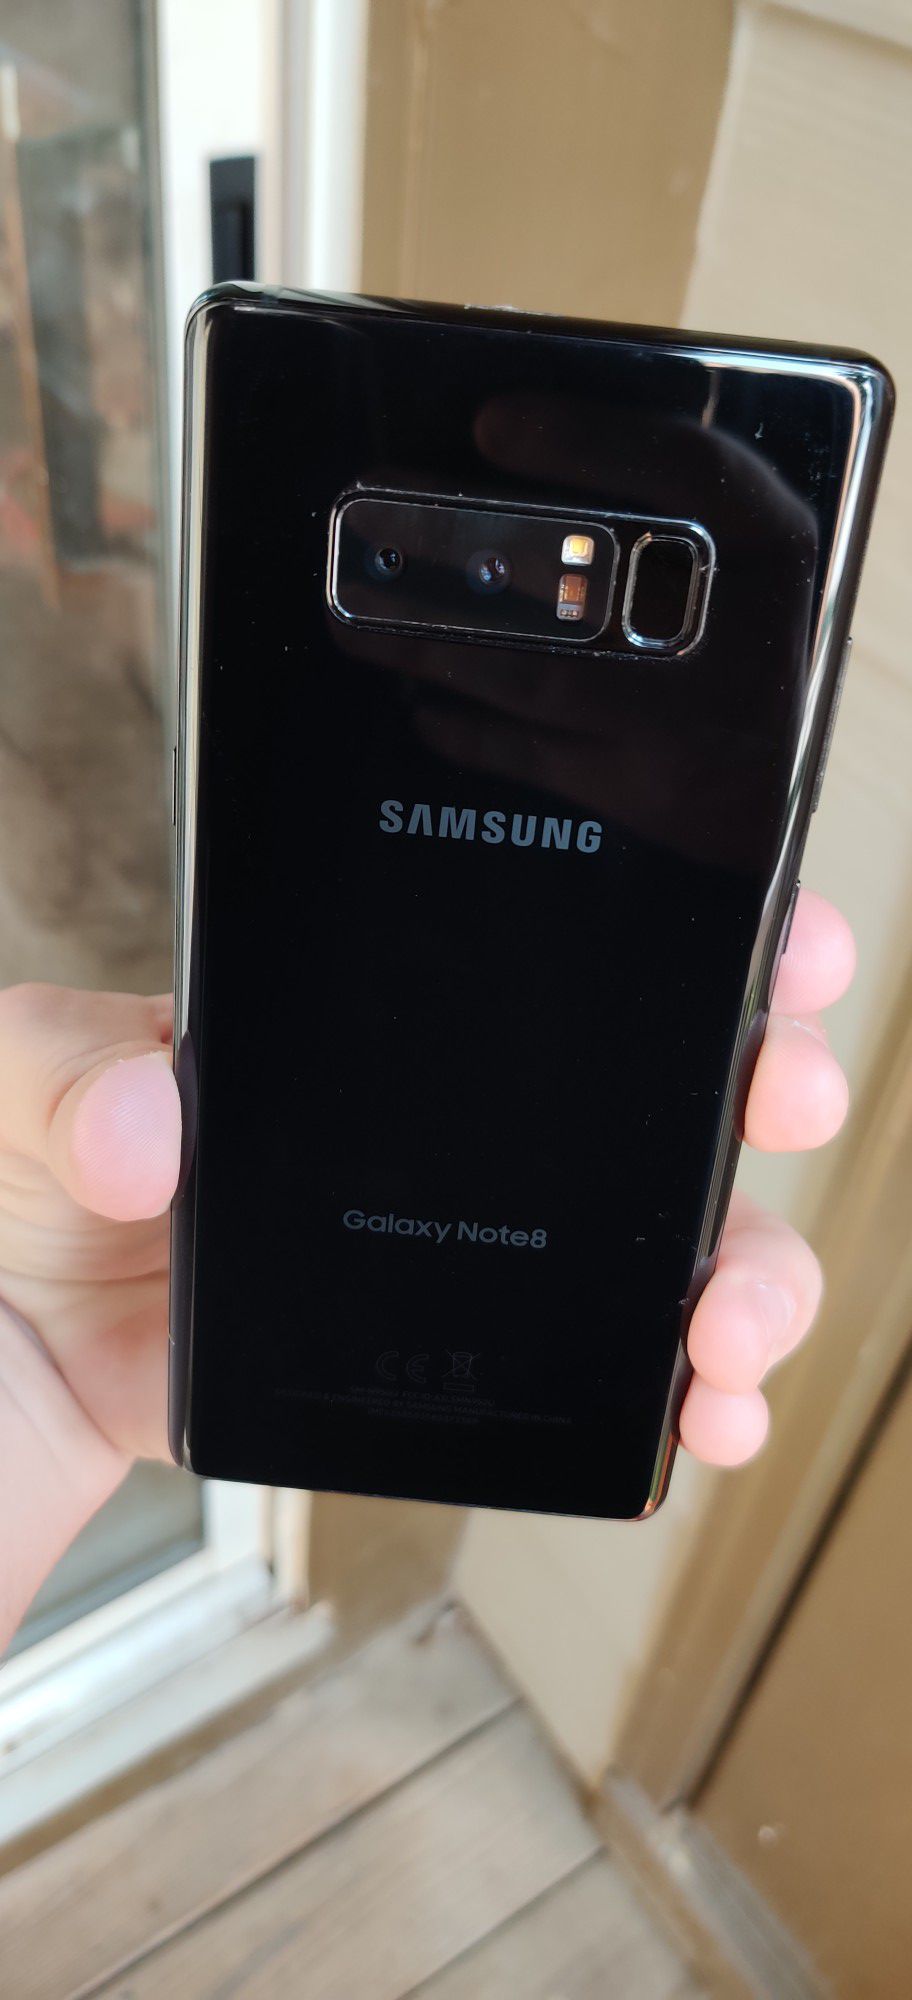 Samsung Galaxy Note 8 Unlocked